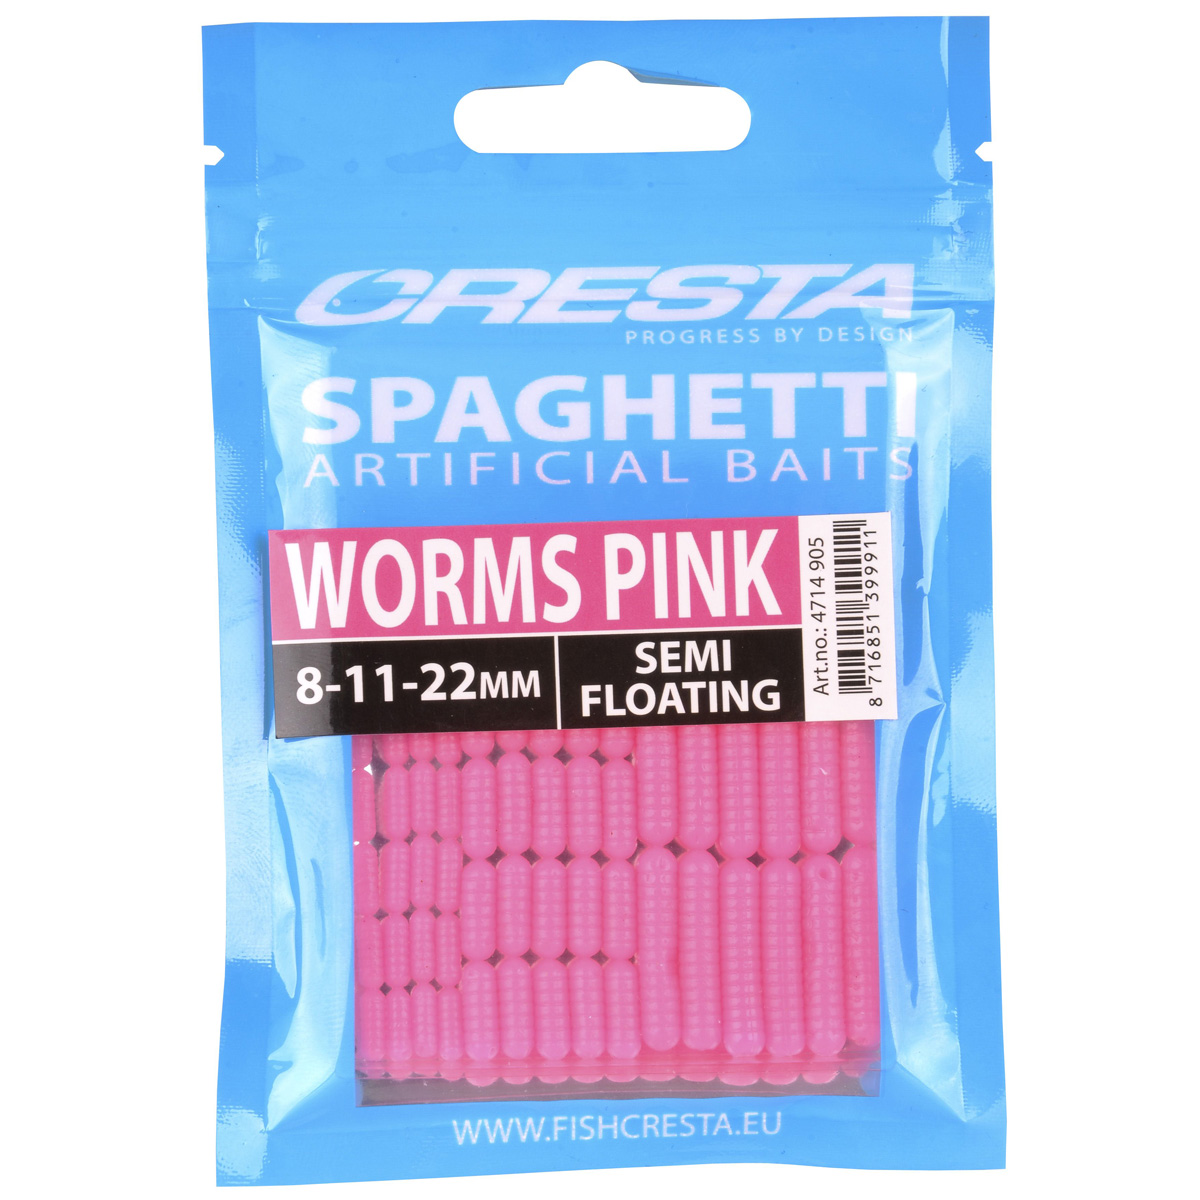 Cresta Spaghetti Worms - Pink